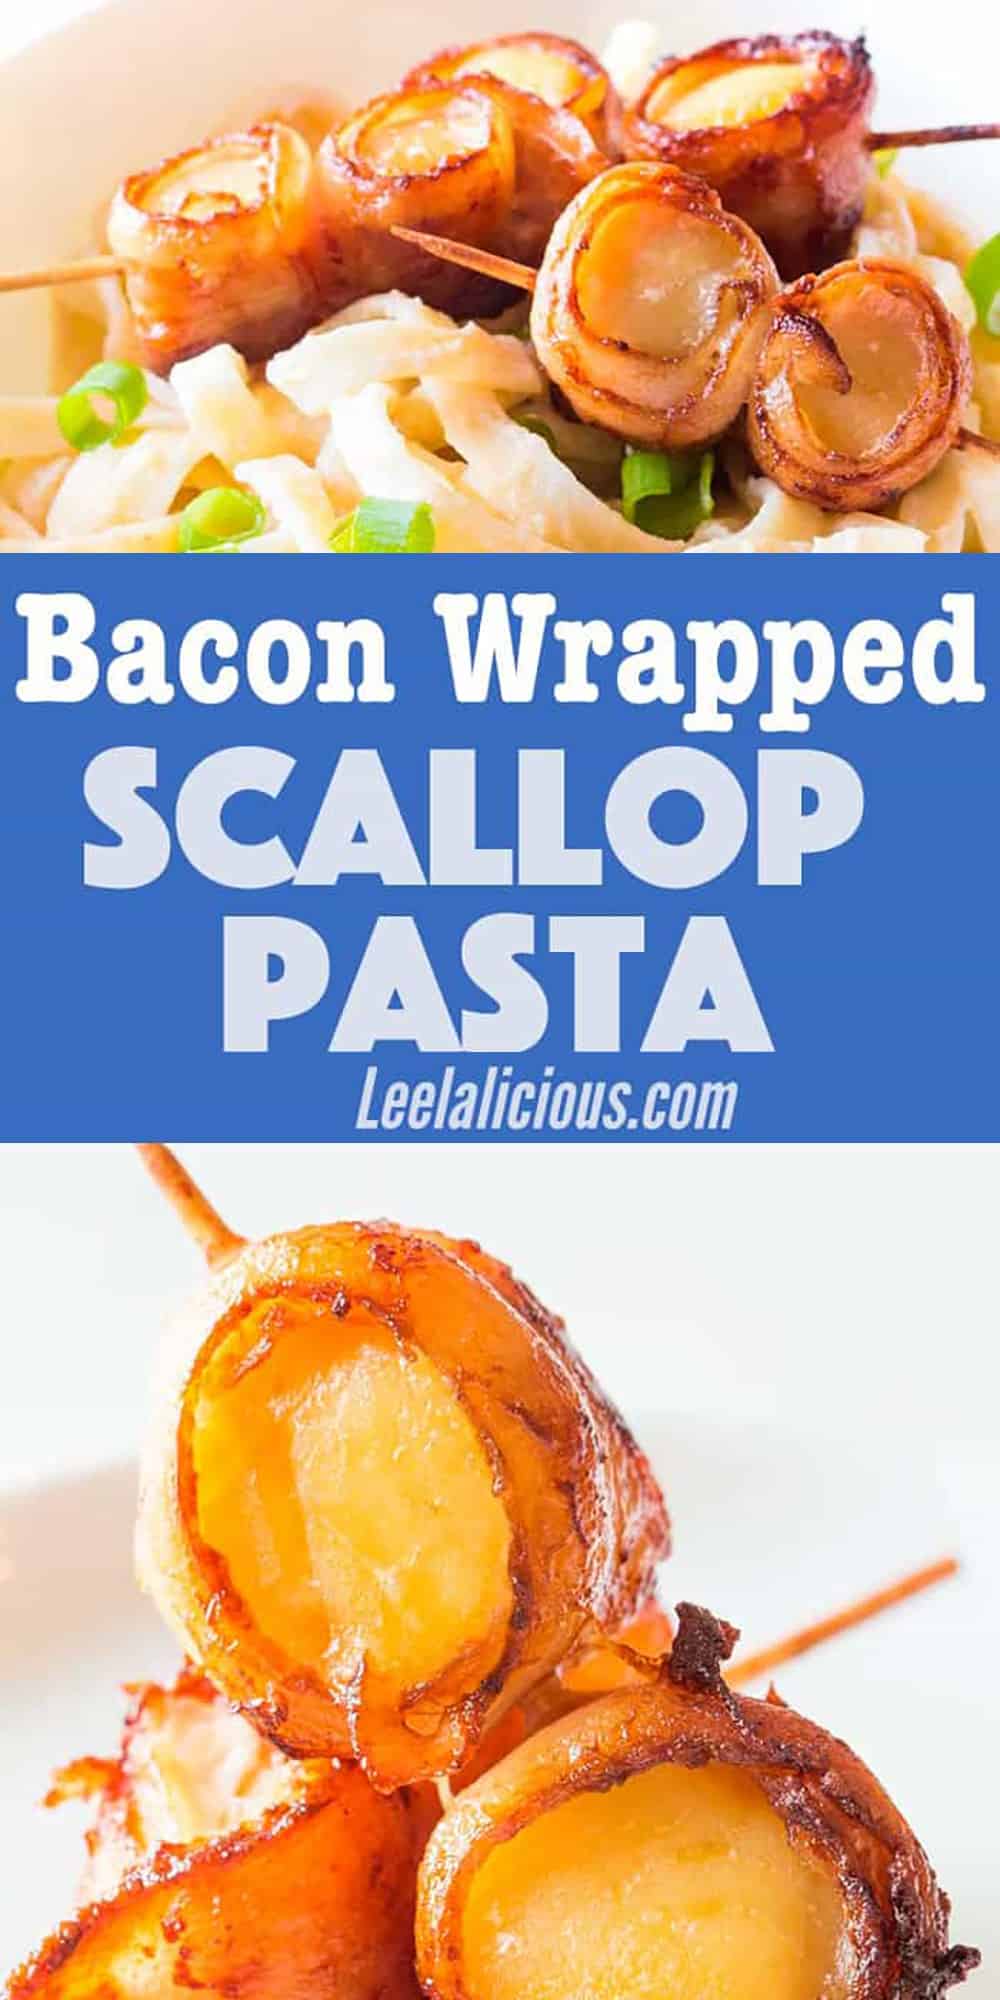 Bacon Wrapped Scallops Pasta